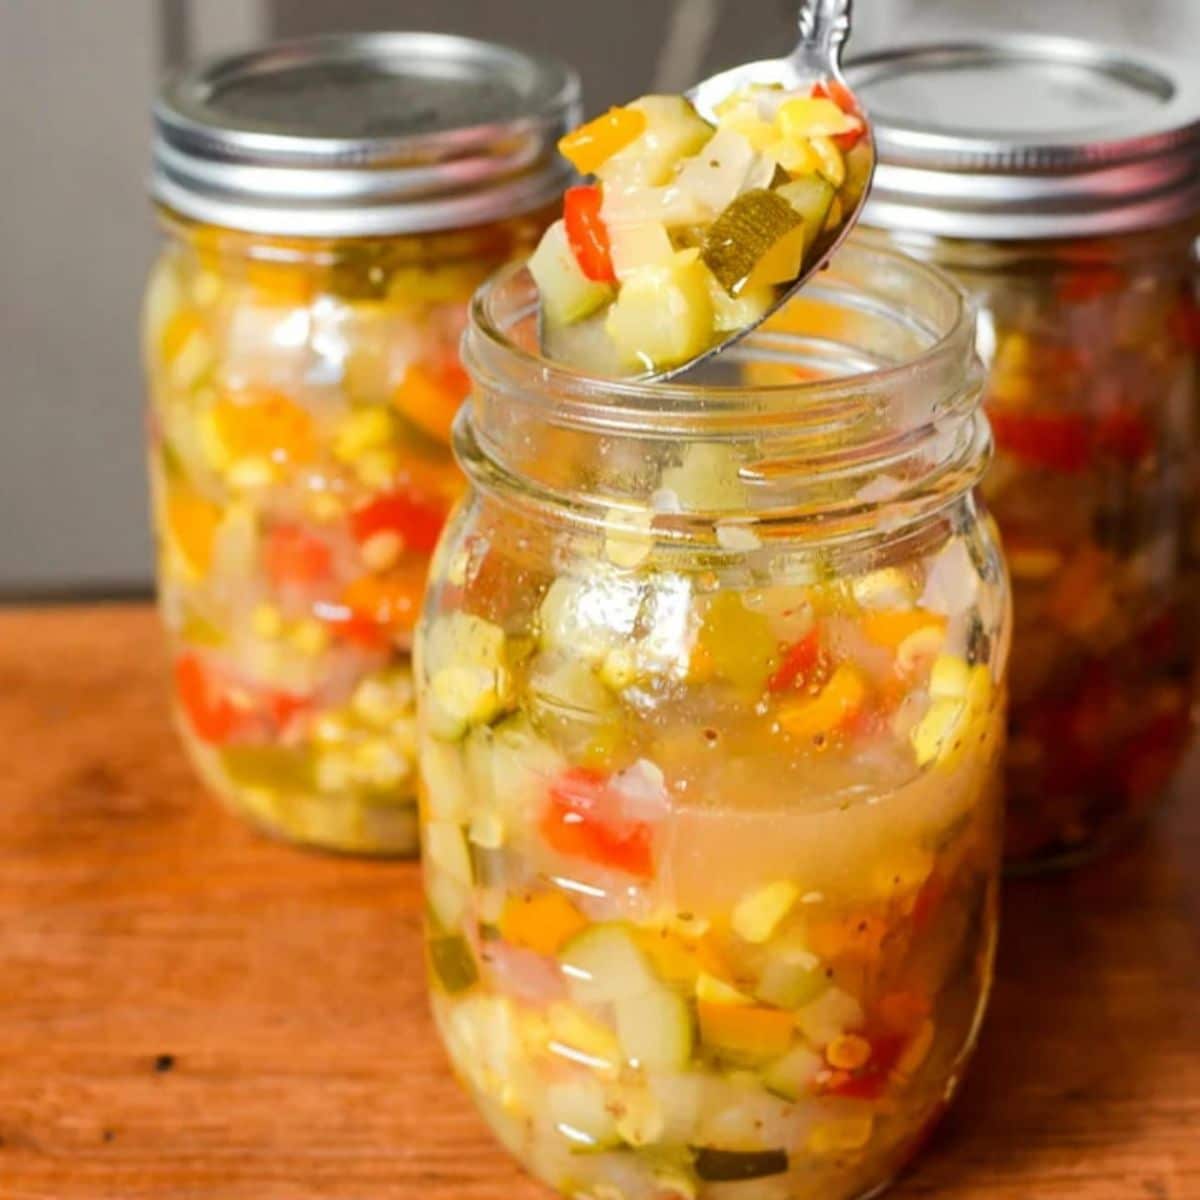 Zucchini corn relish canned in glass jars.